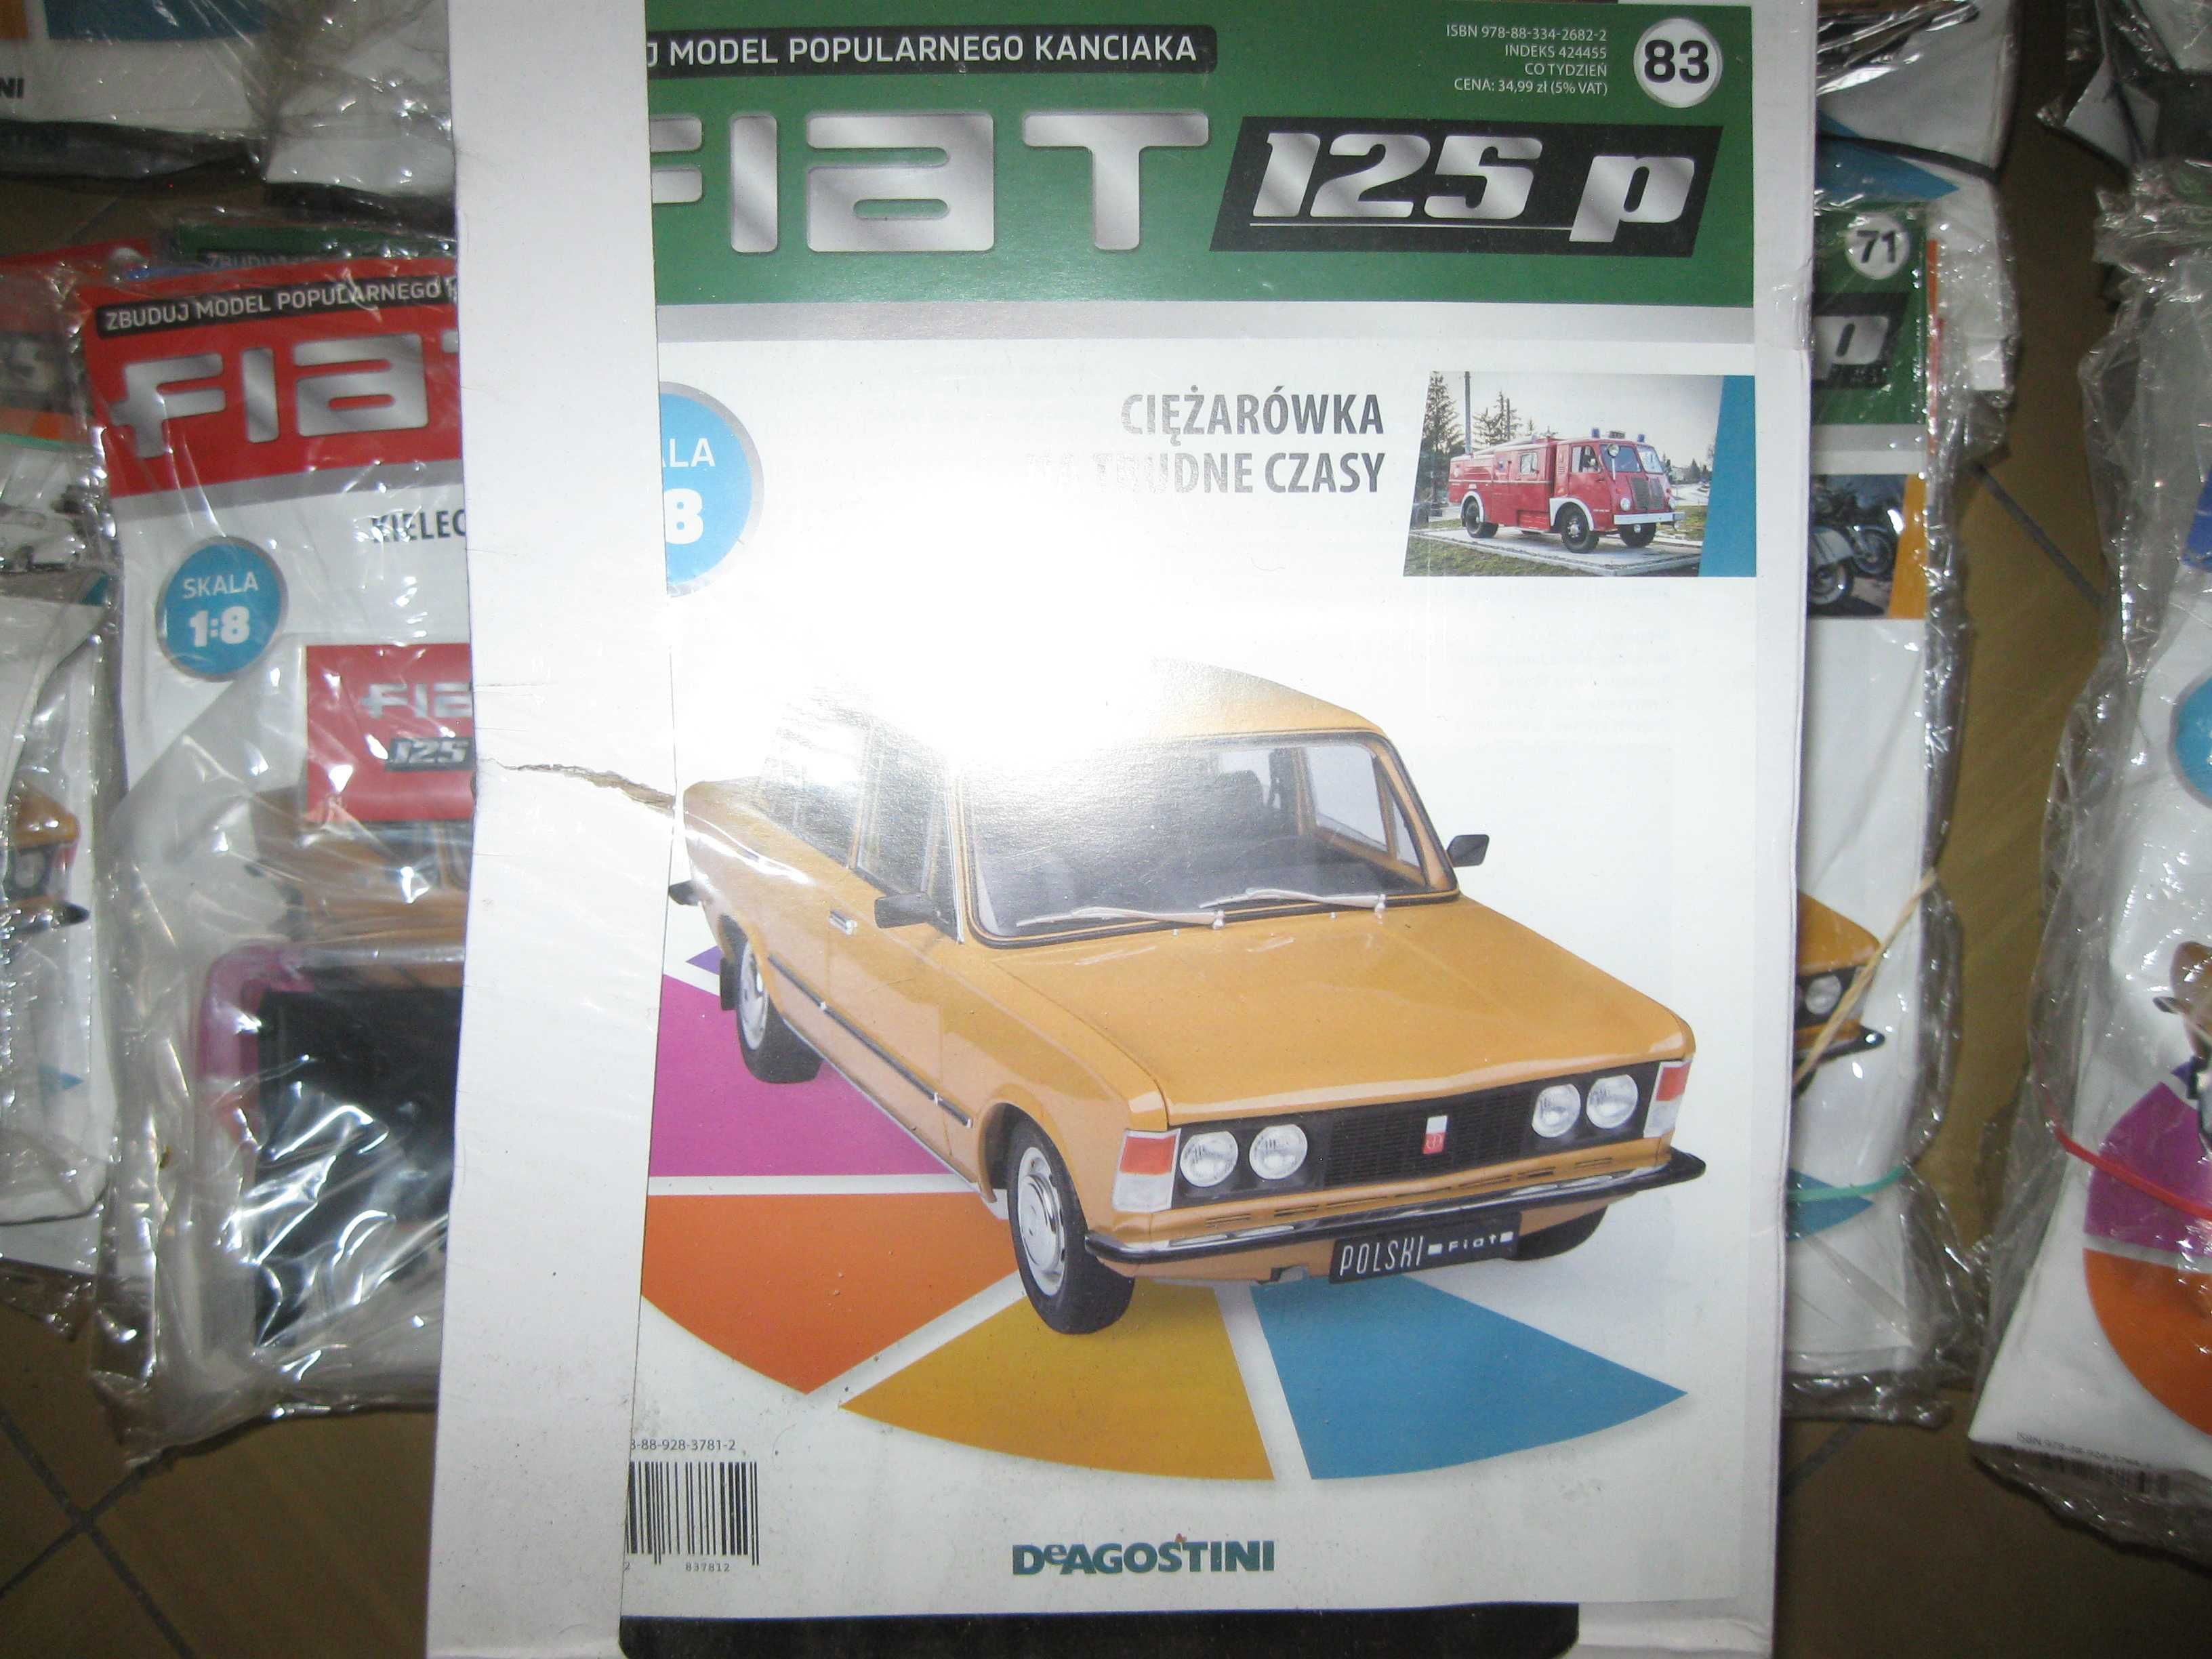 Fiat 125 p kolekcja deagostini